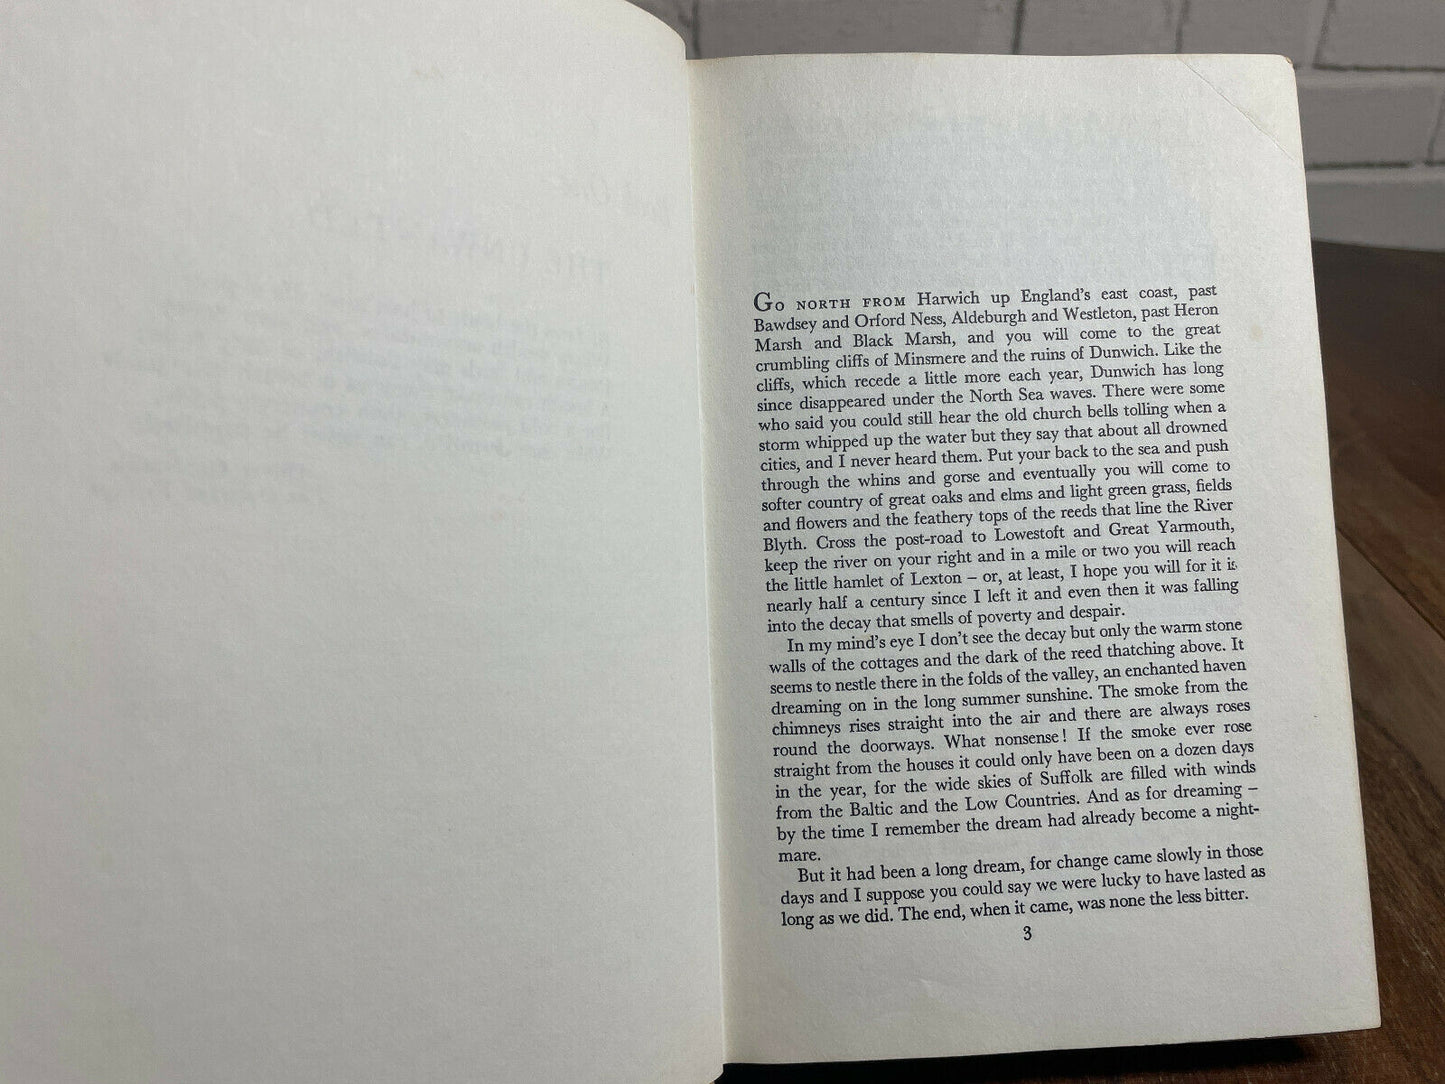 Wild Dog Running, Alan Scholefield, The Book Society, 1970, Hardc